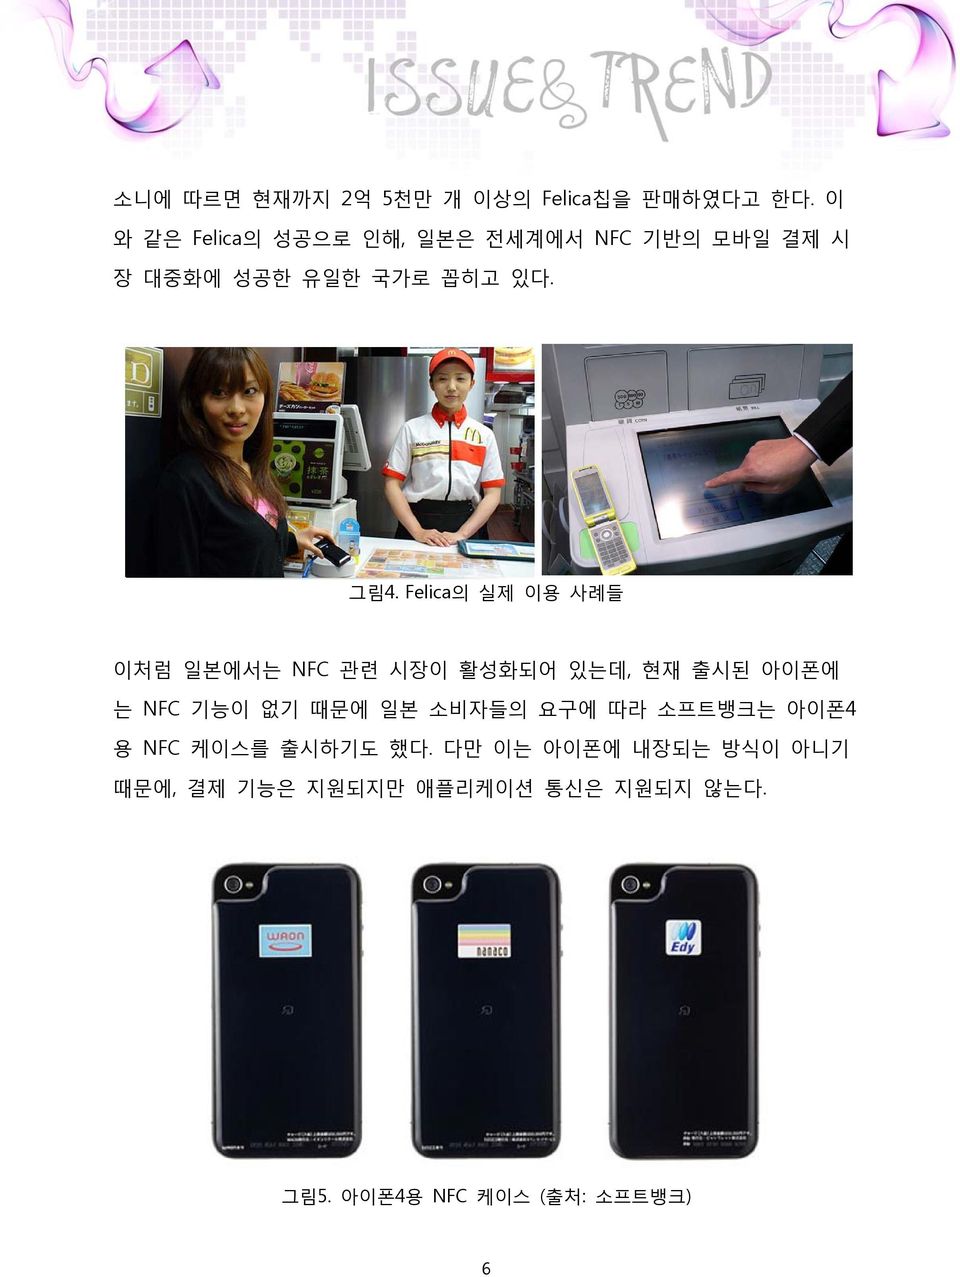 Felica의 실제 이용 사례들 이처럼 일본에서는 NFC 관련 시장이 활성화되어 있는데, 현재 출시된 아이폰에 는 NFC 기능이 없기 때문에 일본 소비자들의